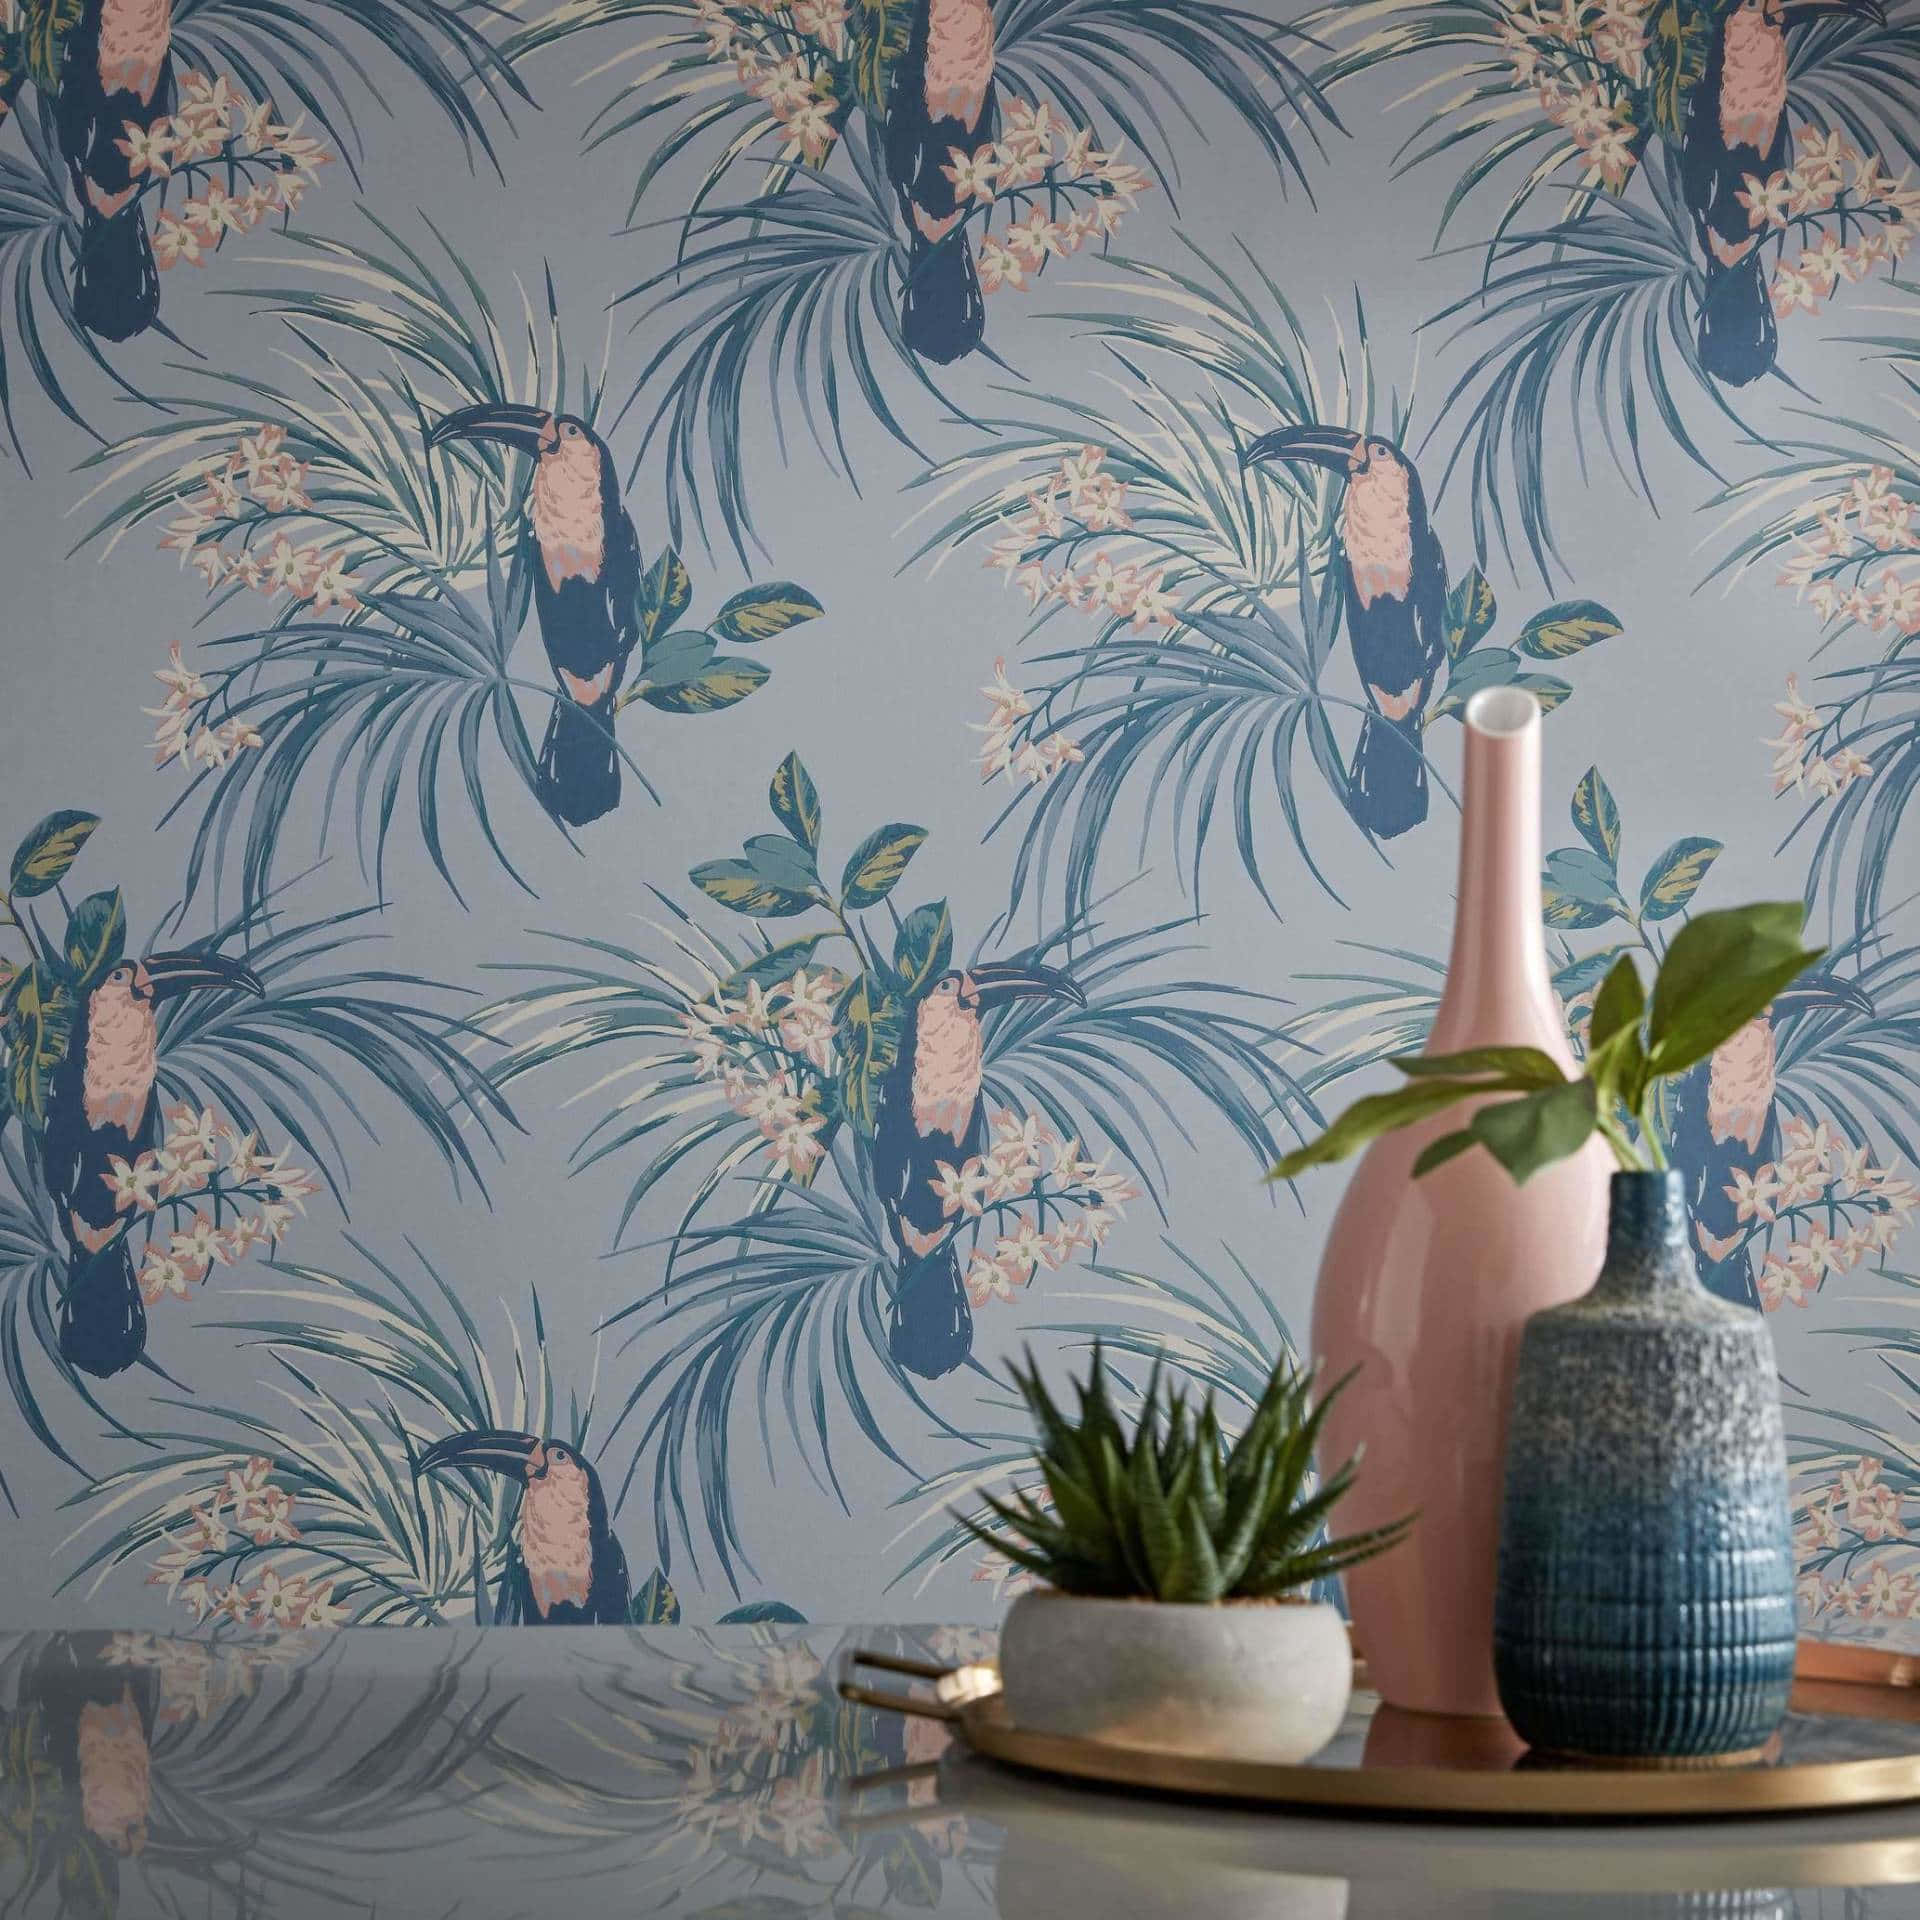 Tropical Toucan Wallpaper Interior Background